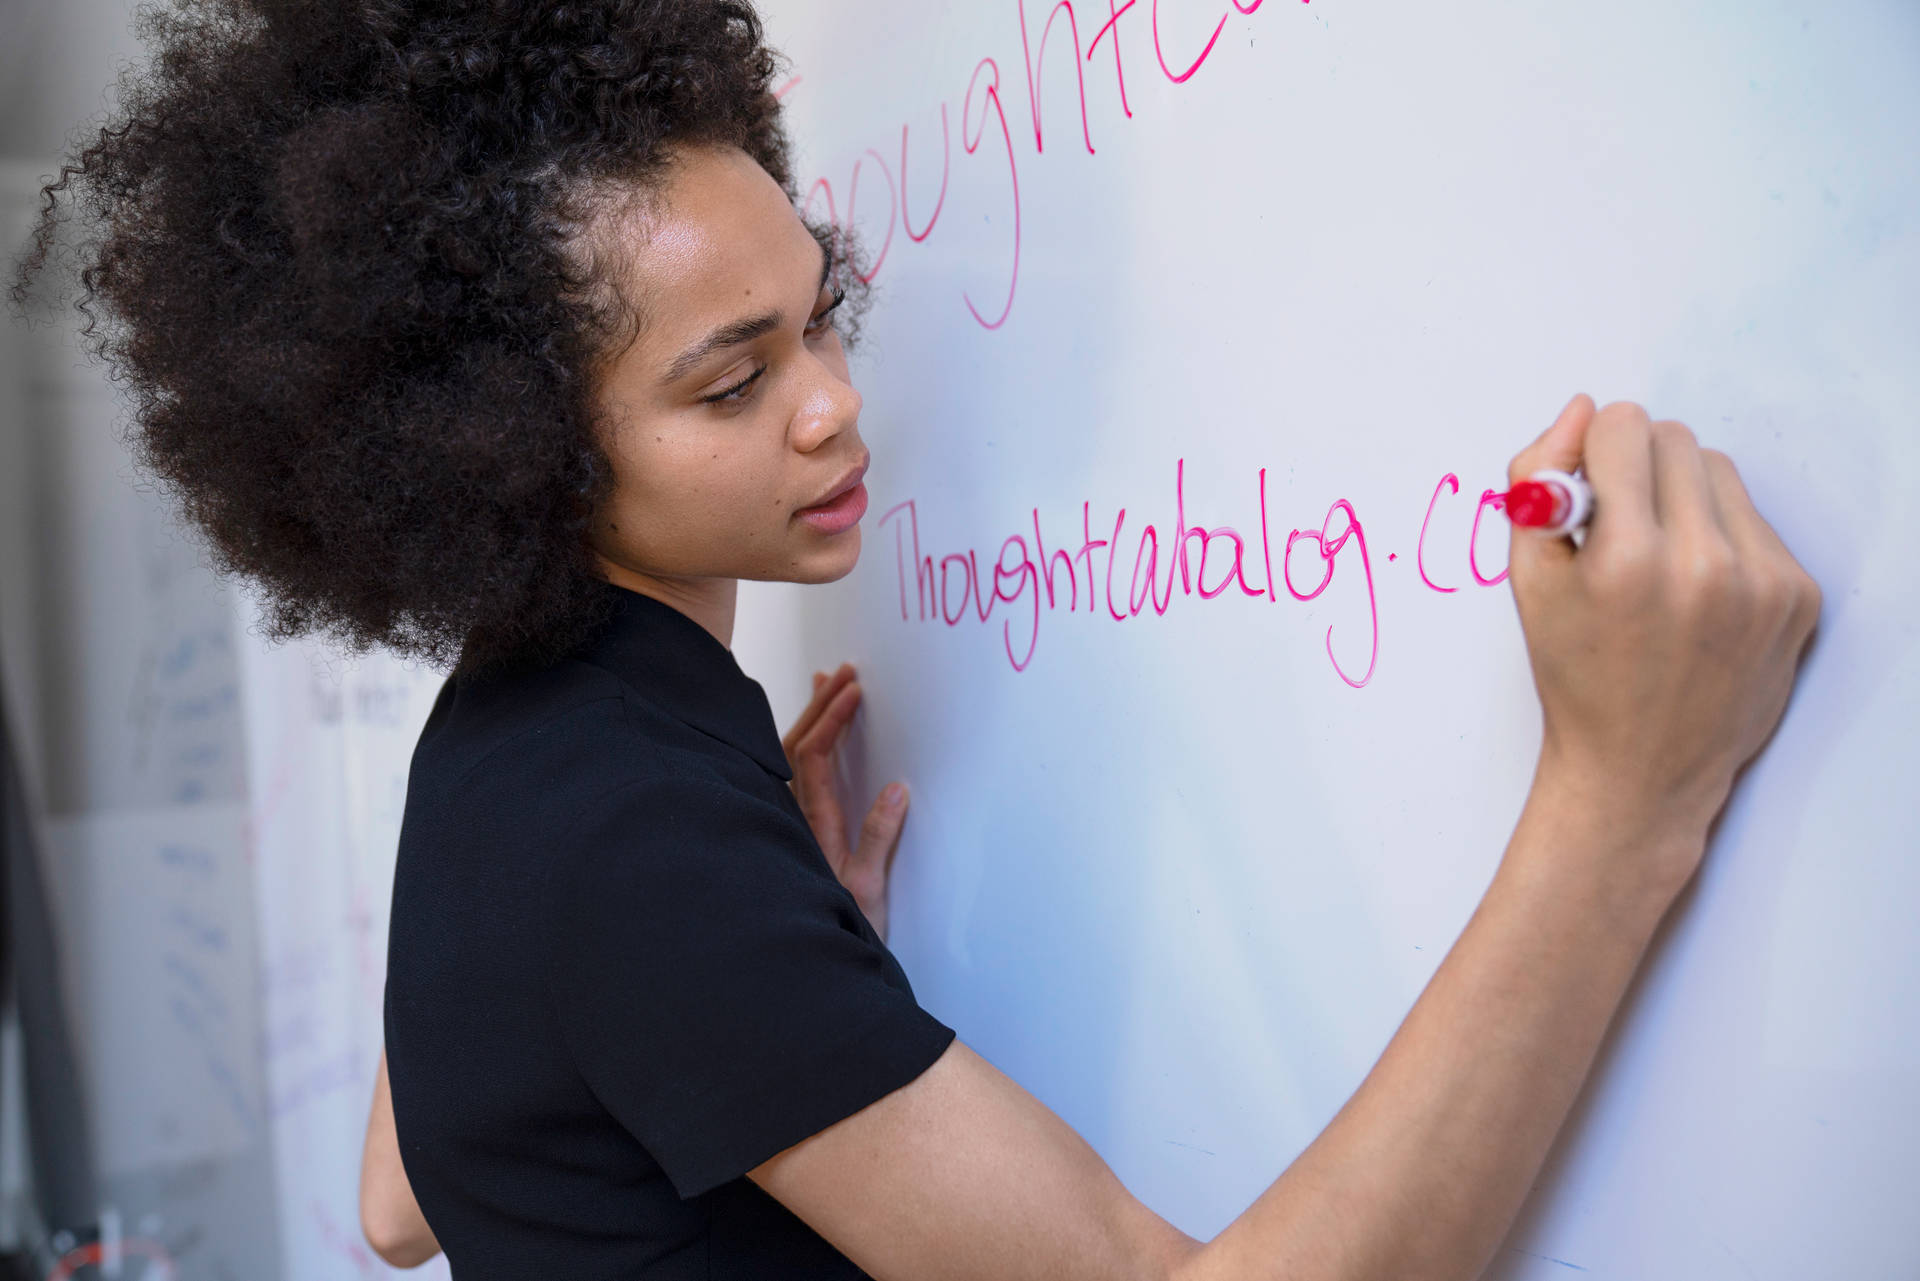 Woman Writing On Whiteboard Education